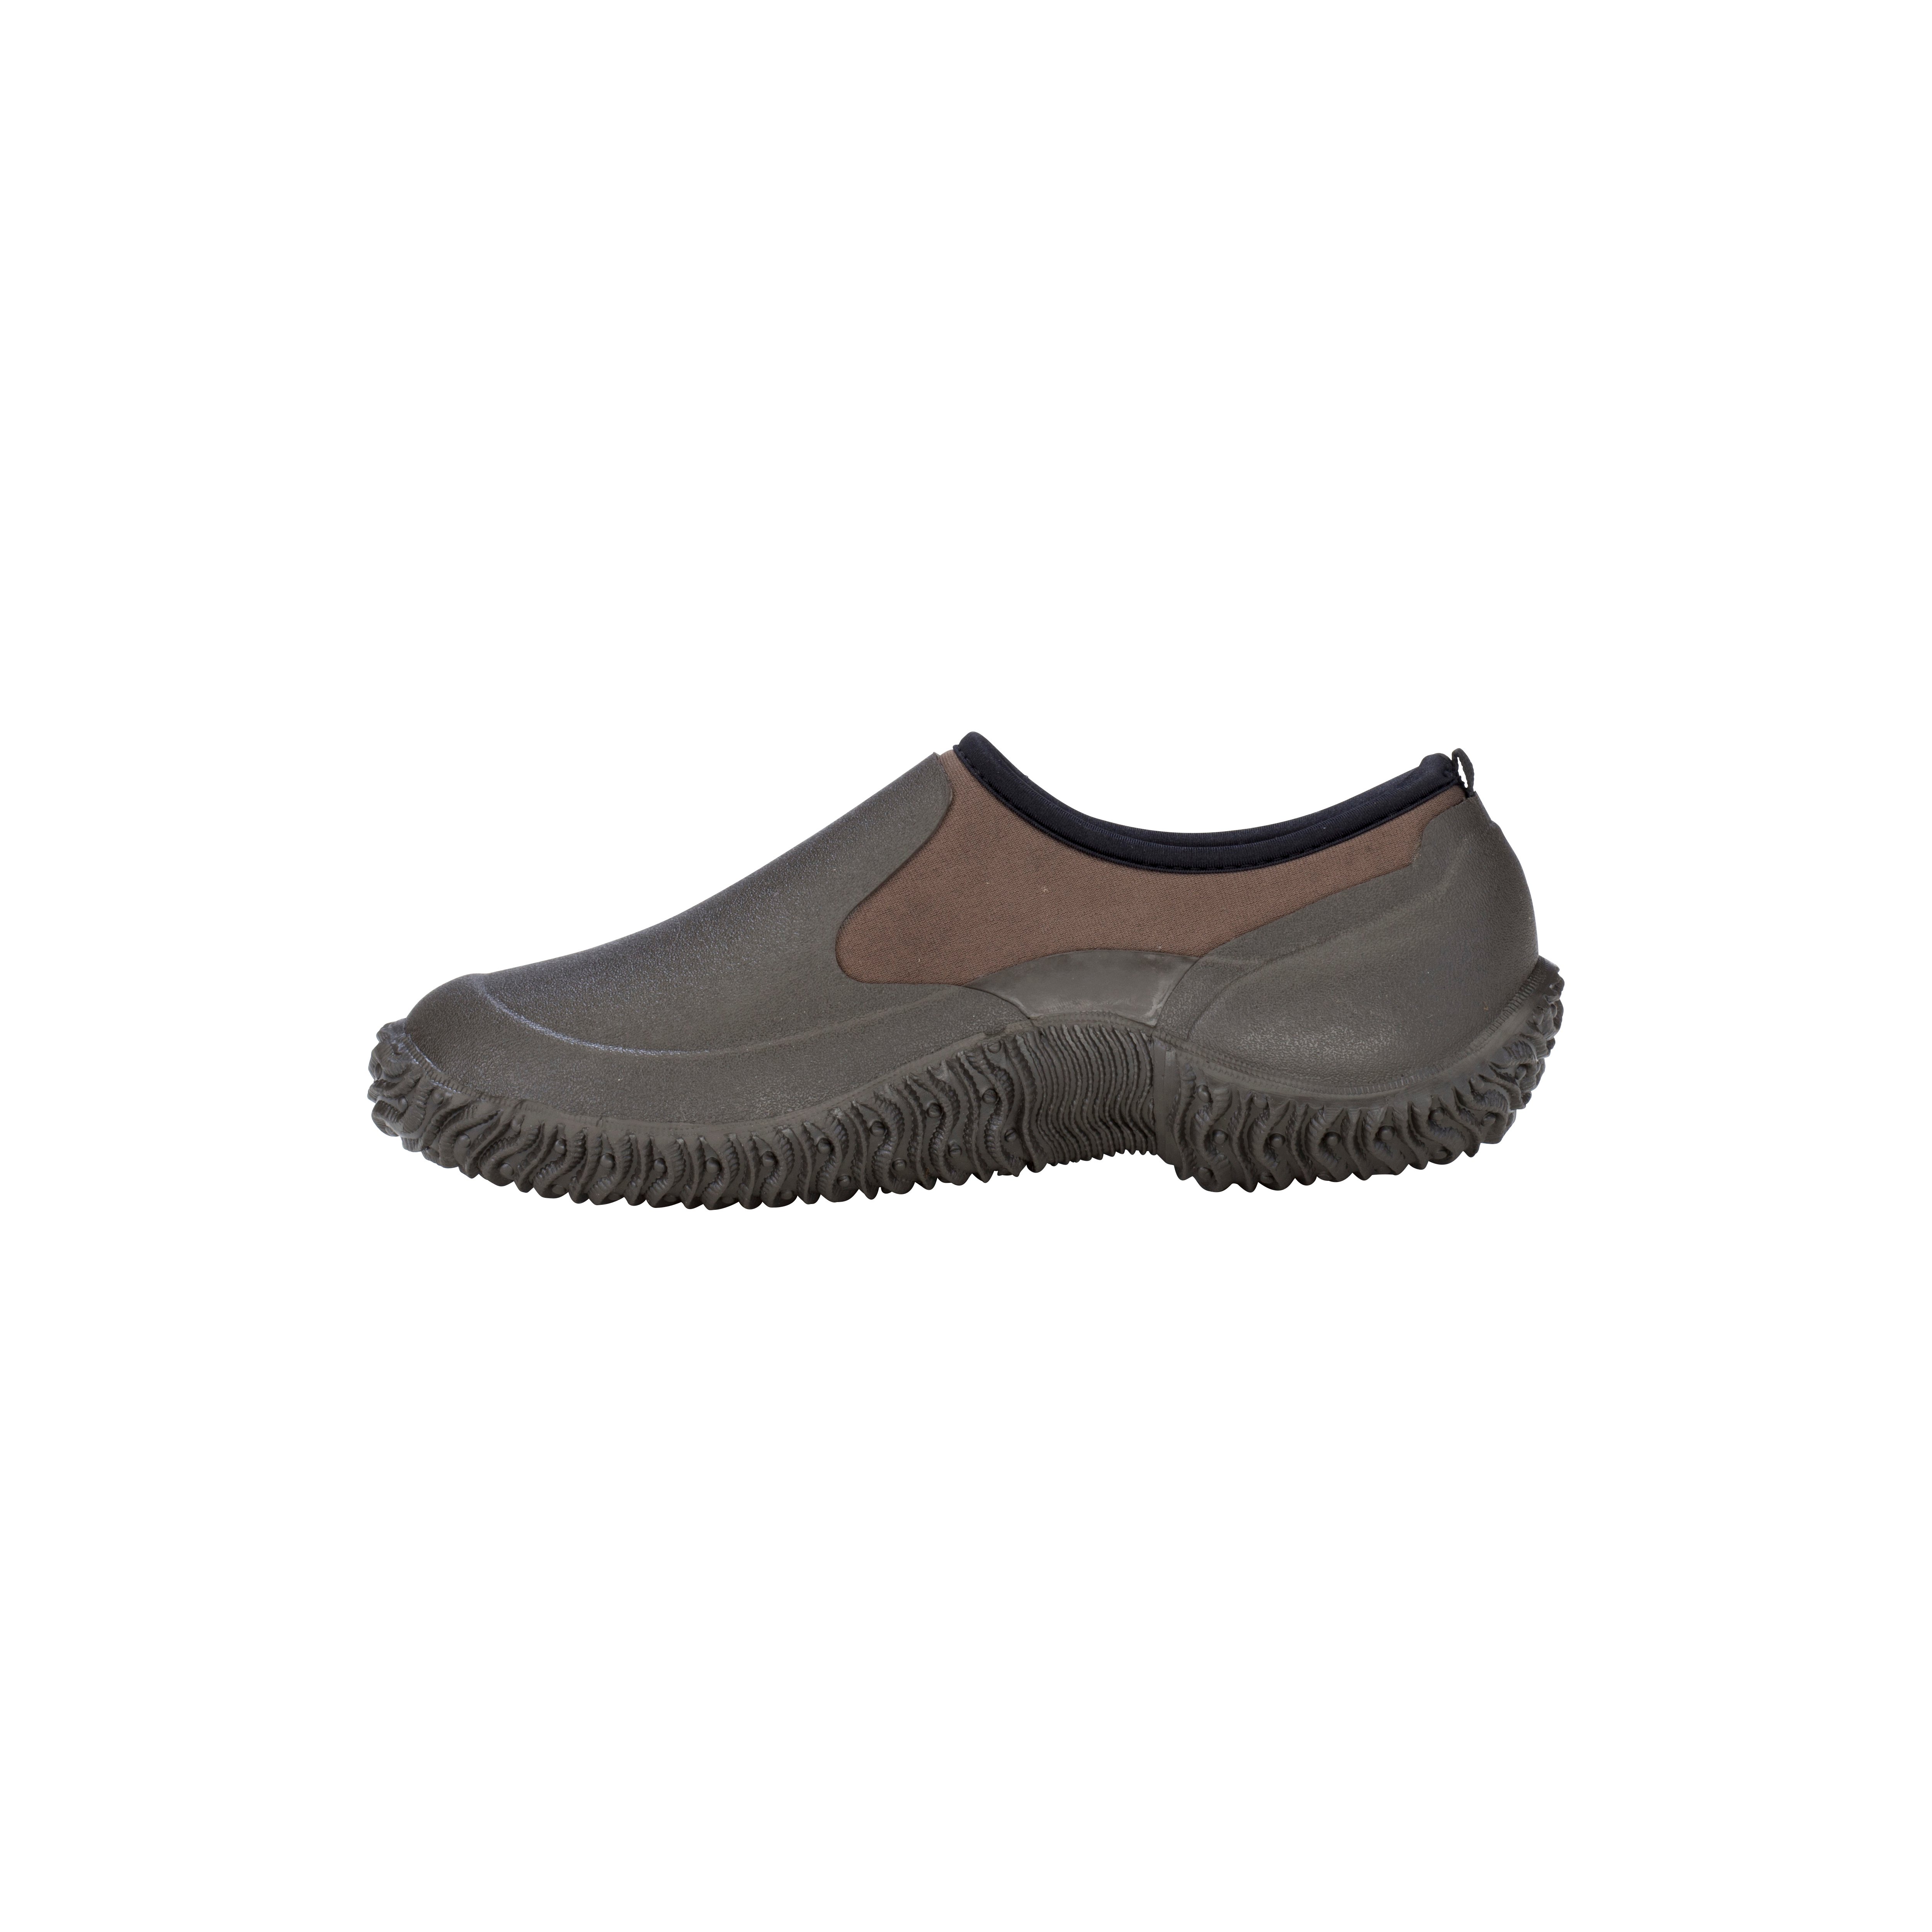 Legend Camp Shoe Khaki – Dryshod Waterproof Boots